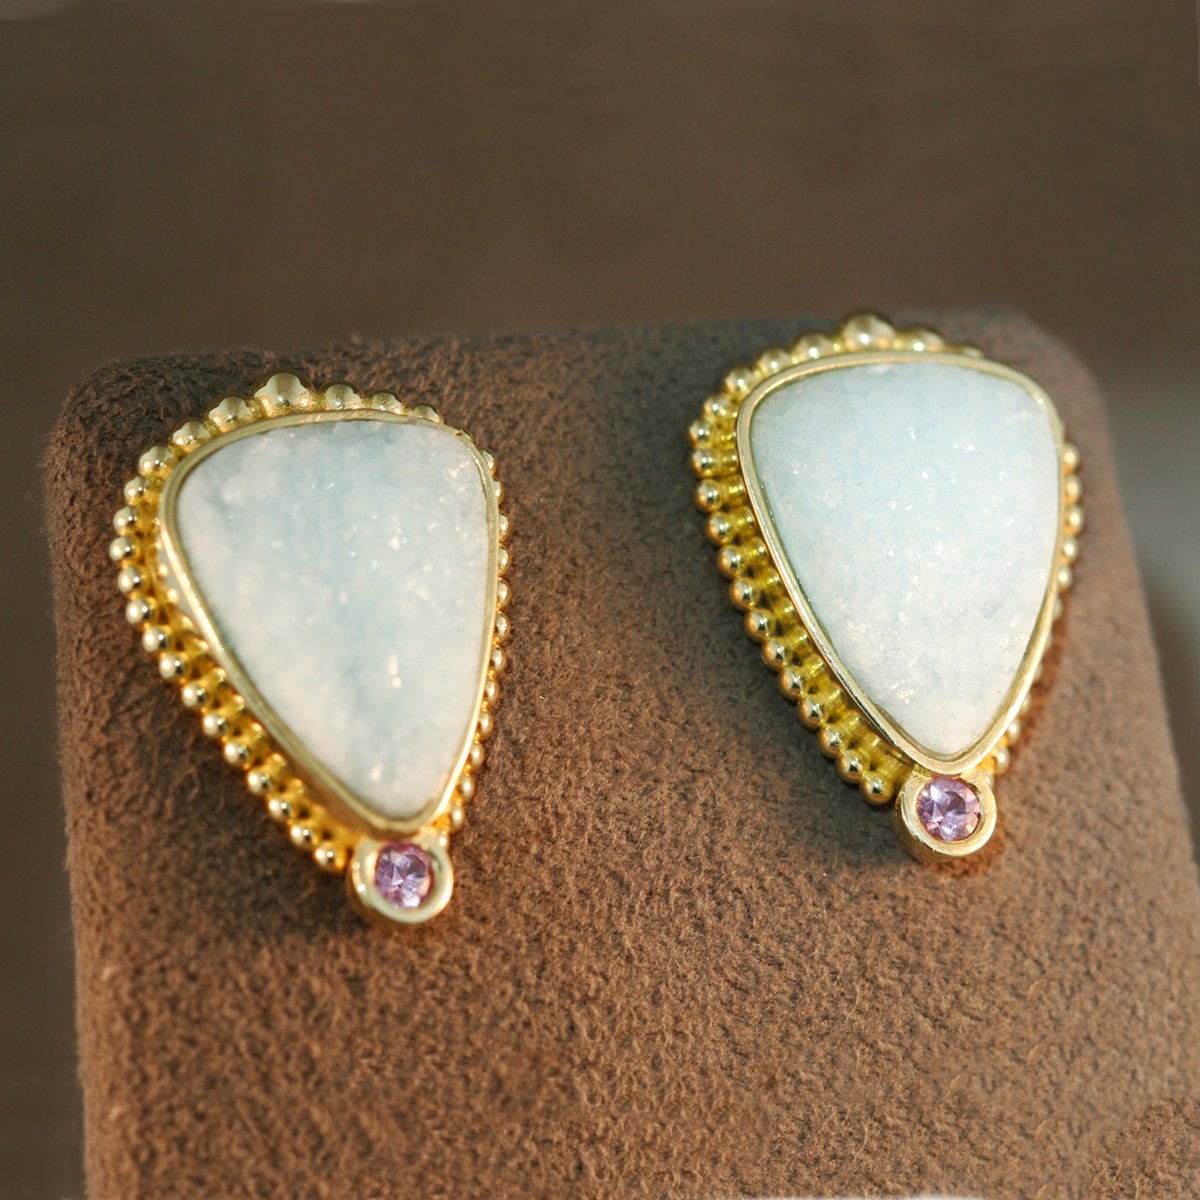 Hemi-morphite Druzy earrings